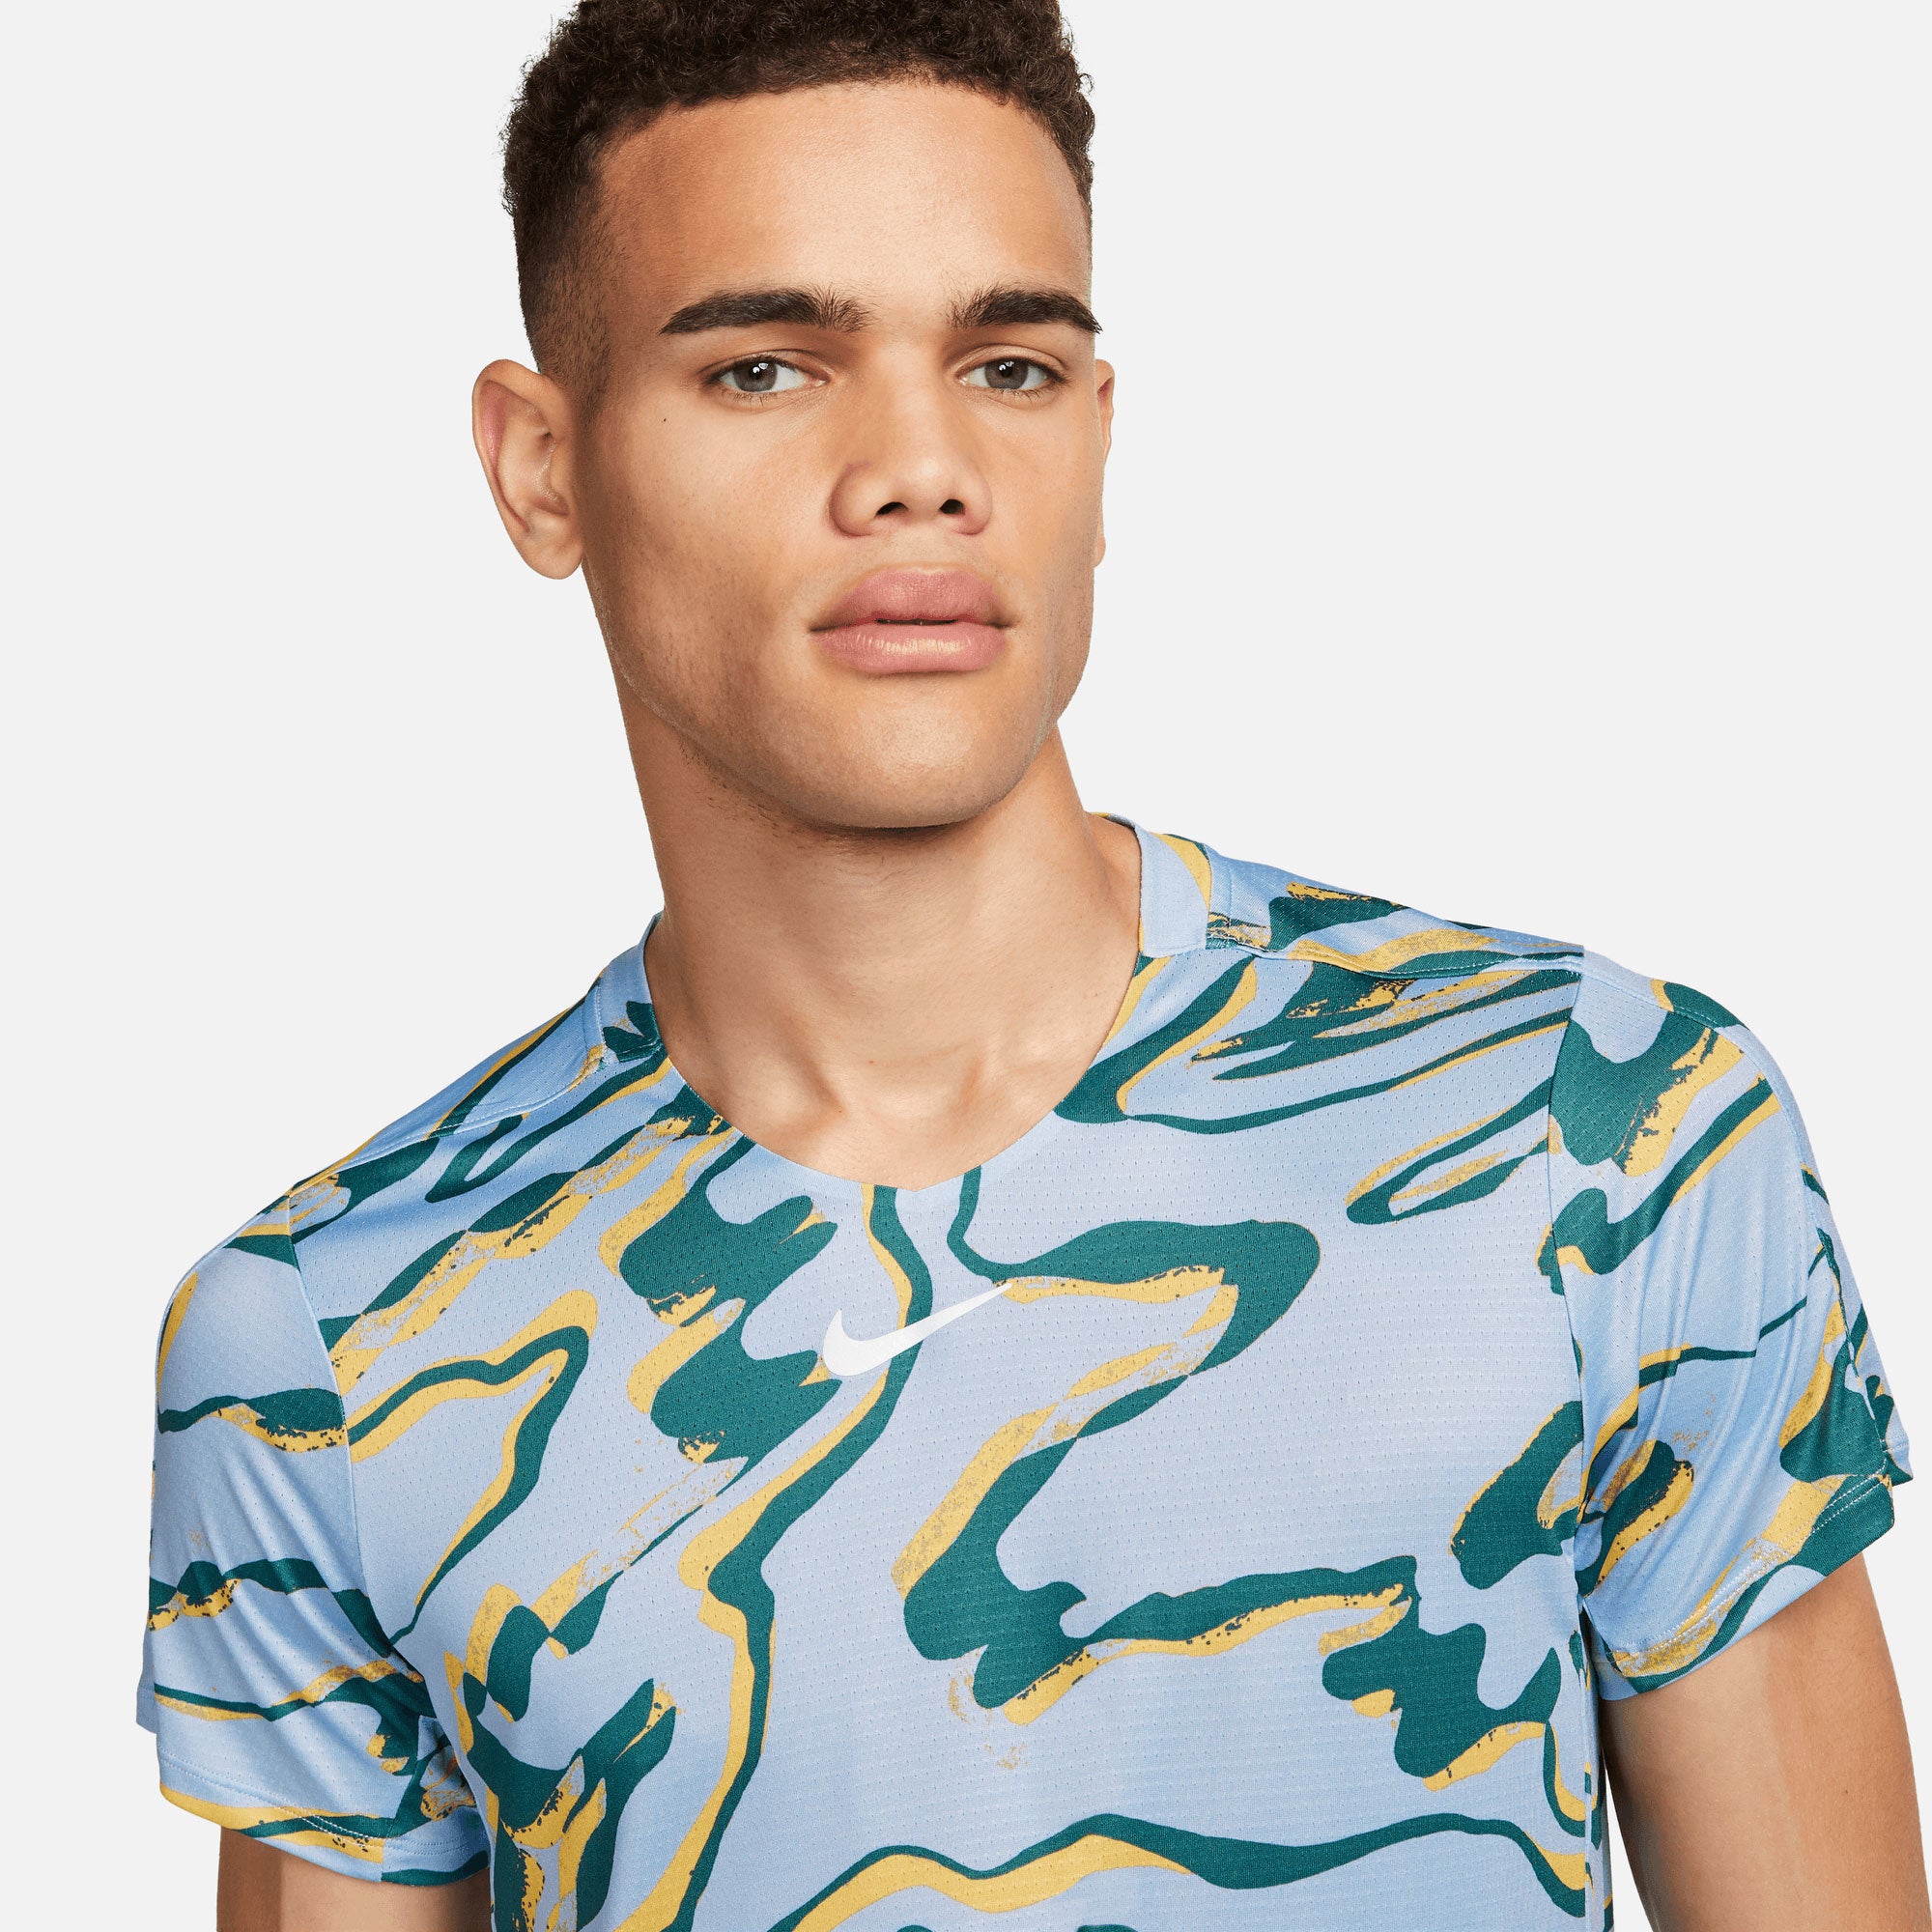 NikeCourt Dri-FIT Advantage Men's Printed Tennis Shirt Blue (3)